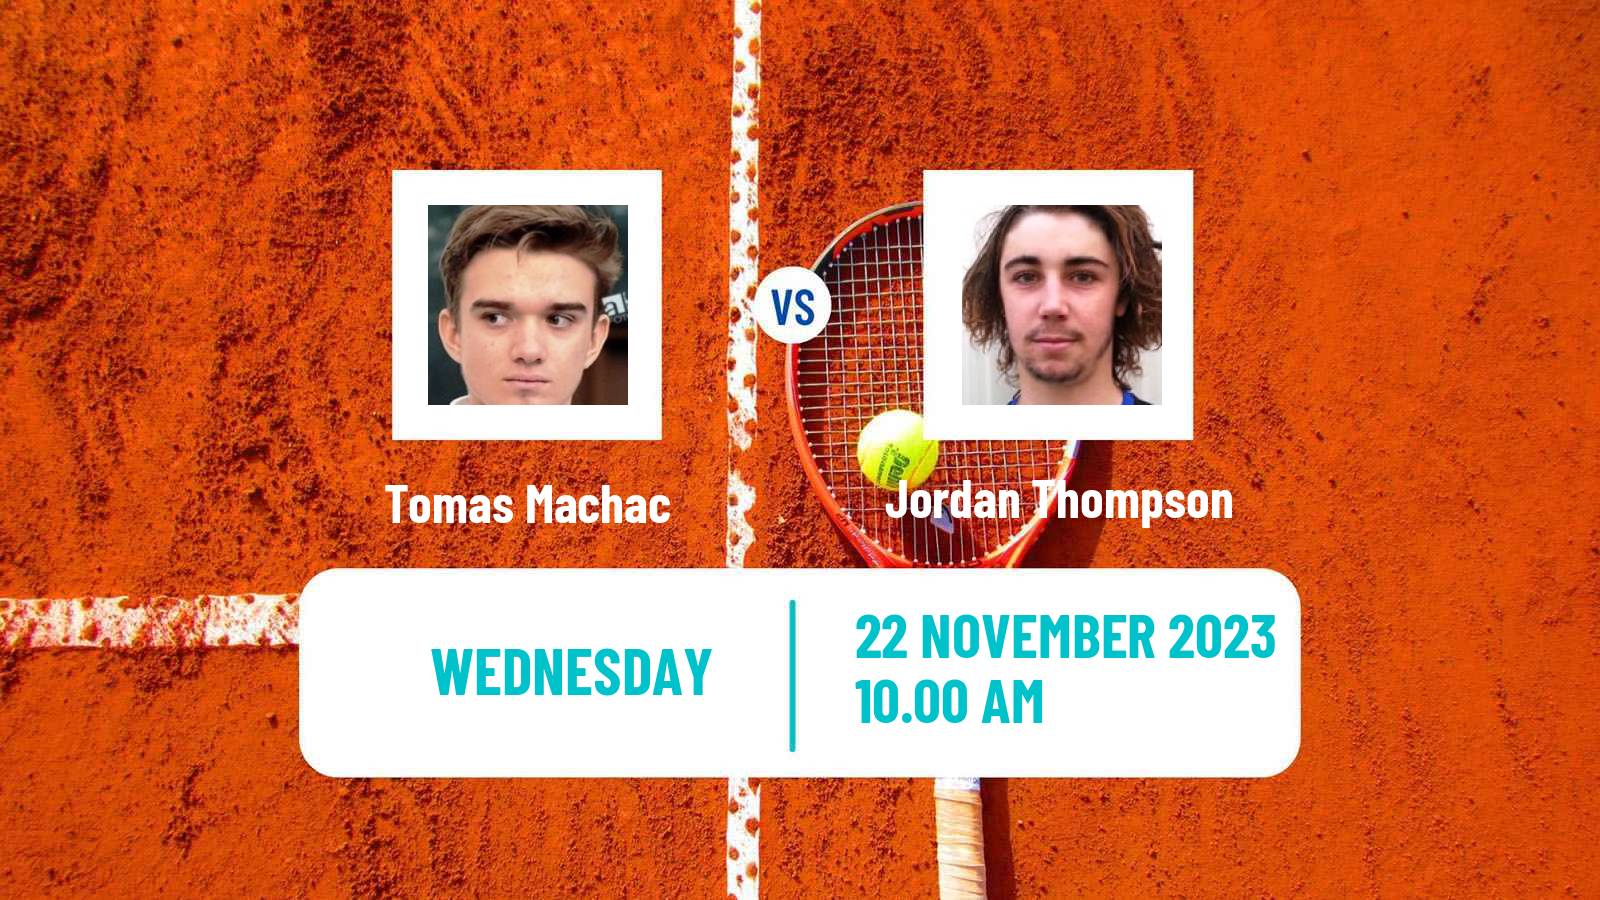 Tennis Davis Cup World Group Tomas Machac - Jordan Thompson